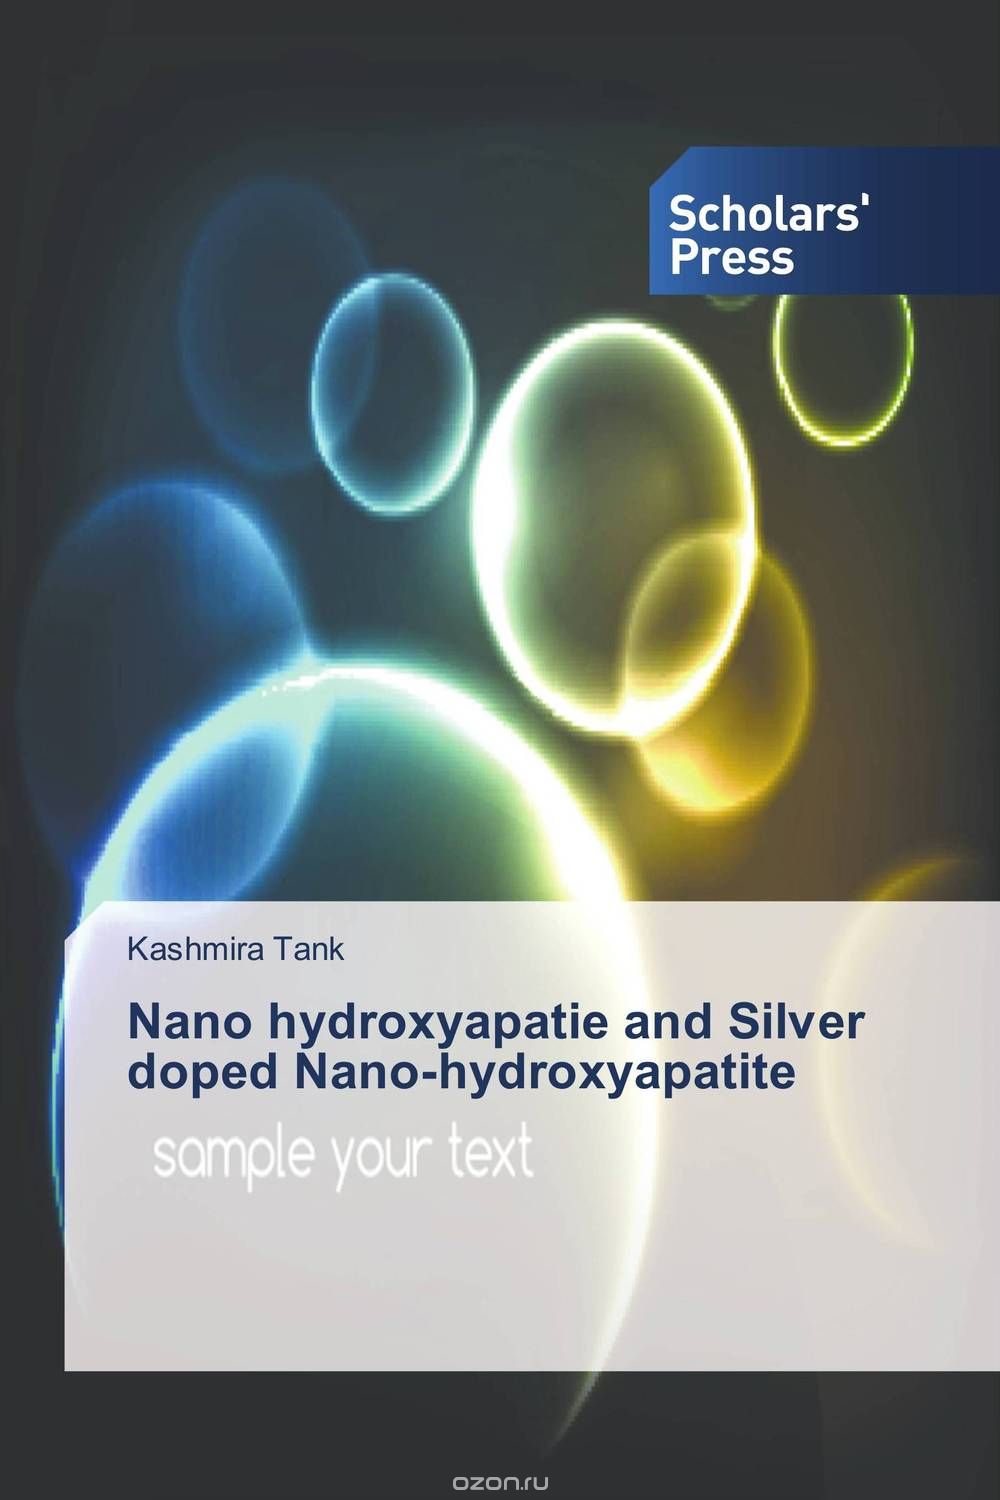 Скачать книгу "Nano hydroxyapatie and Silver doped Nano-hydroxyapatite"